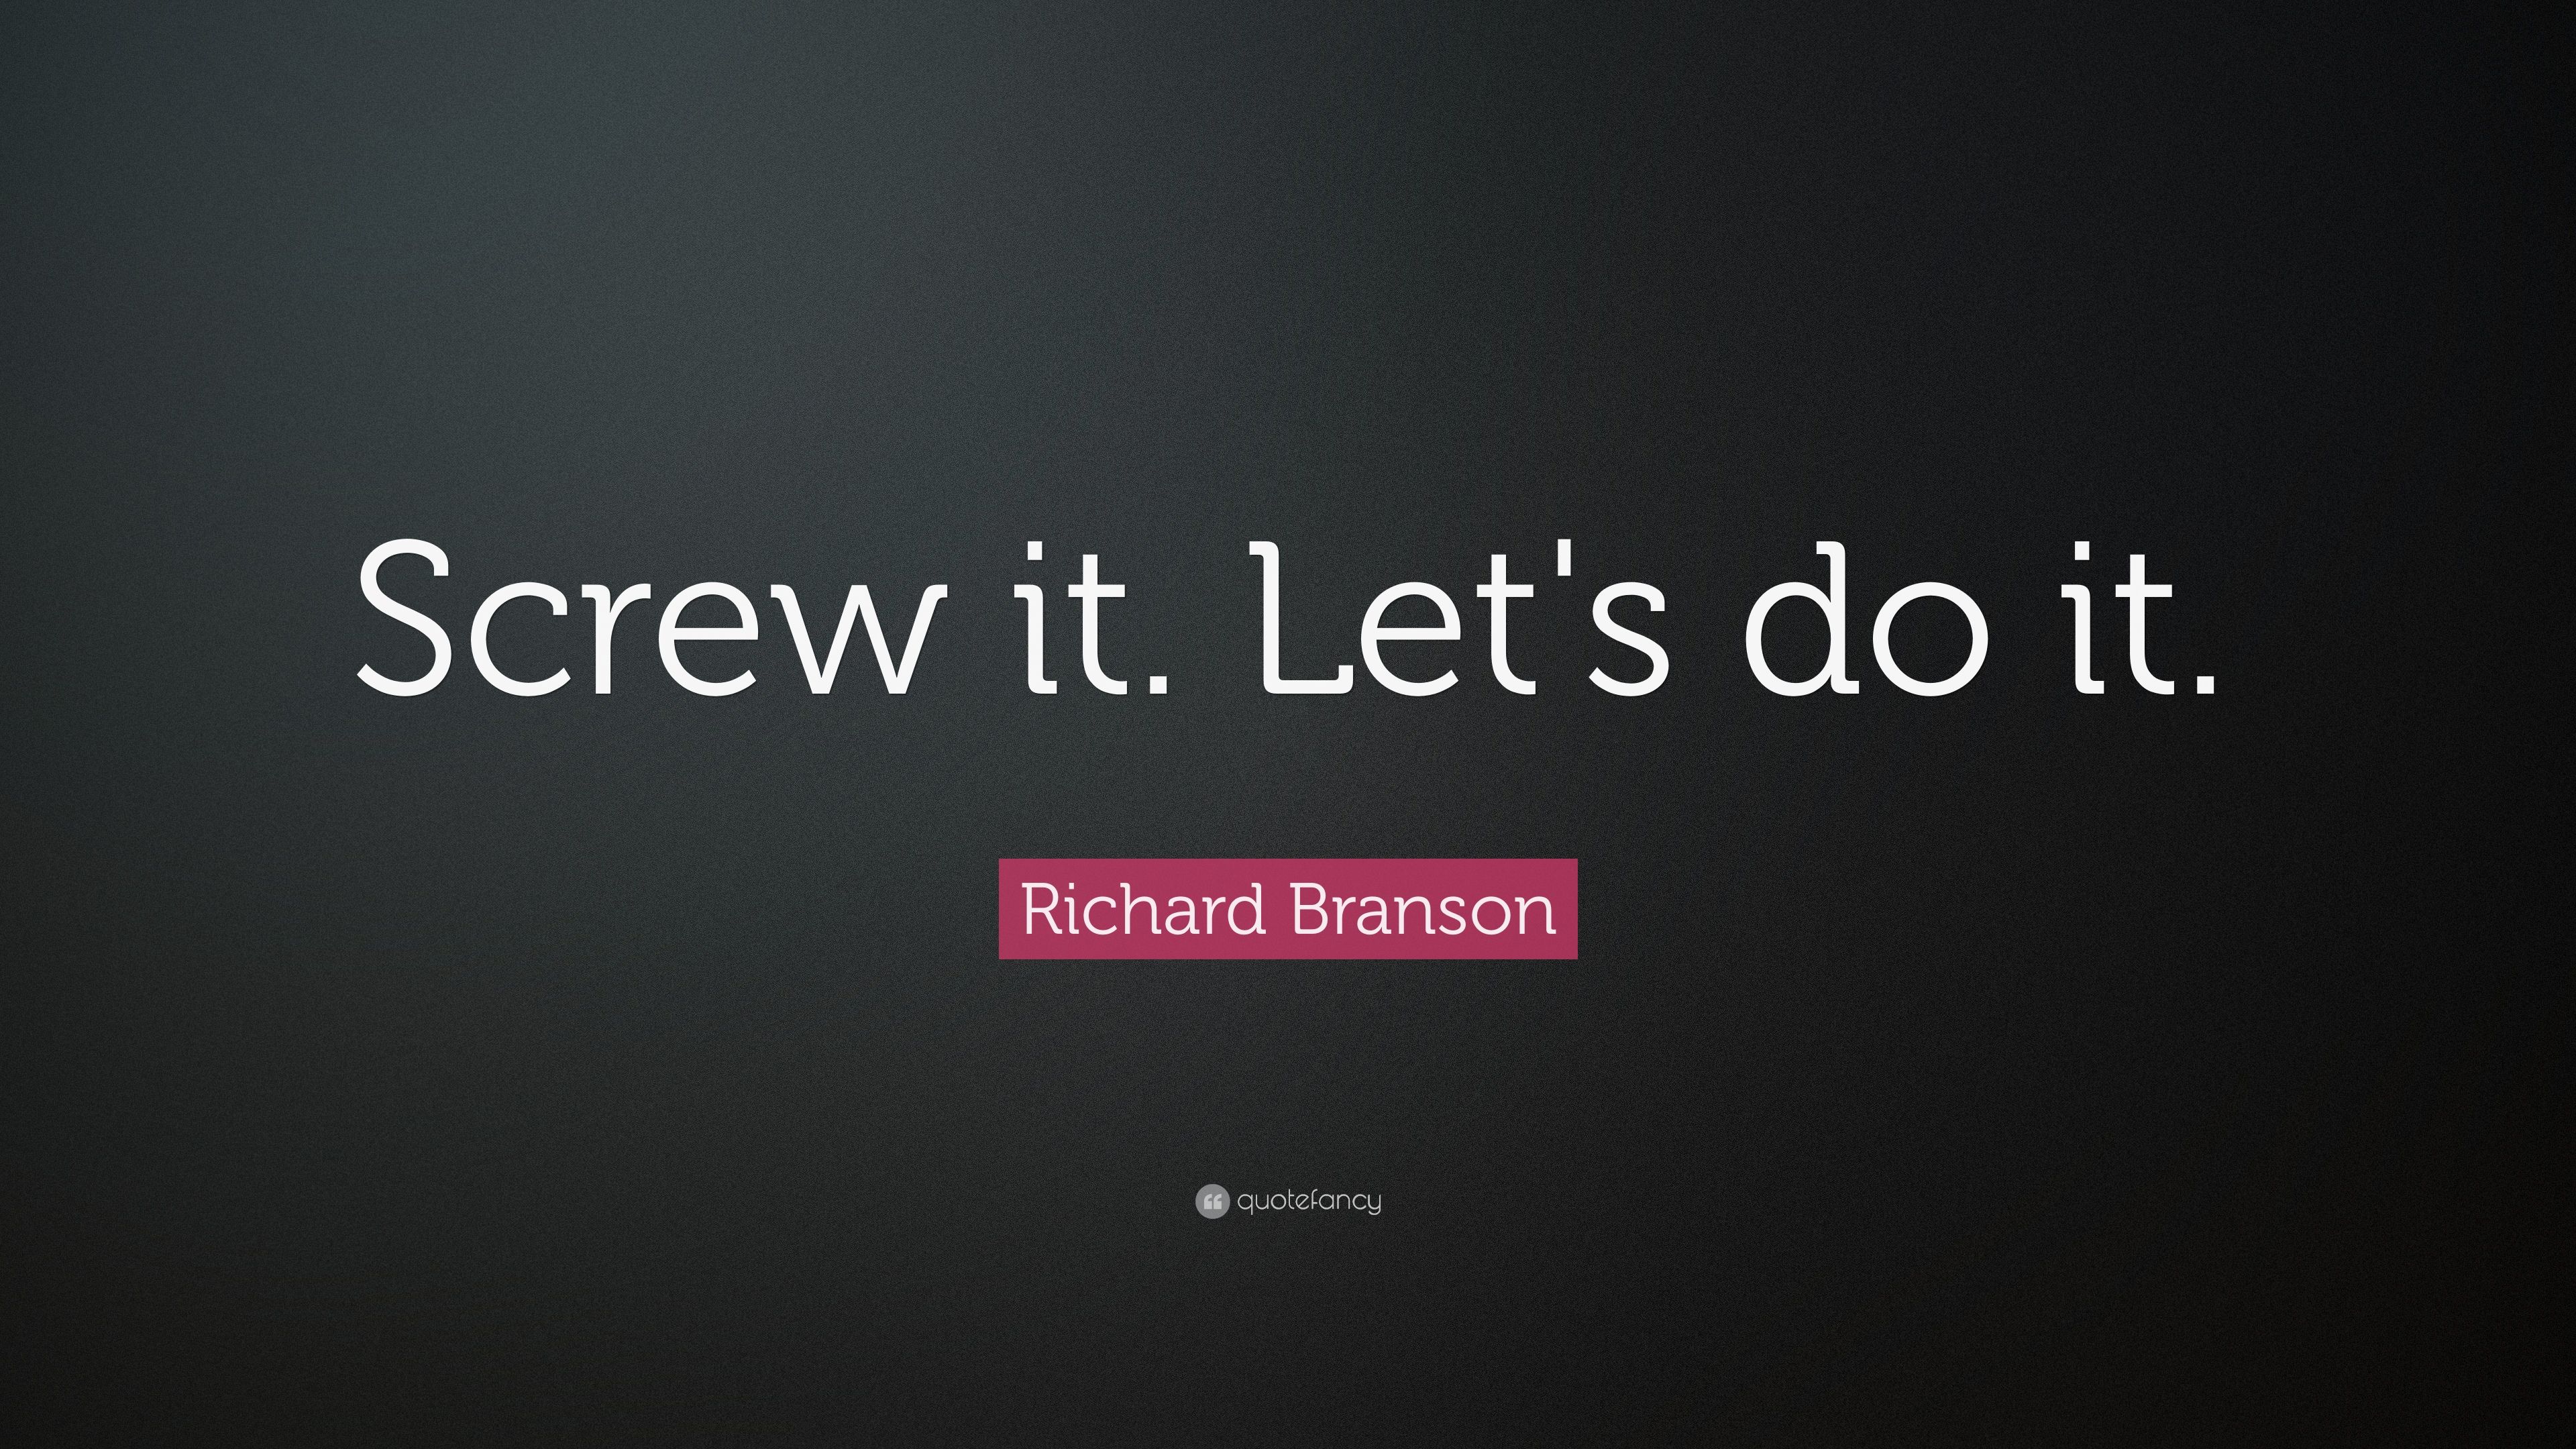 Richard Branson Quote: “Screw it. Let's do it.” 35 wallpaper